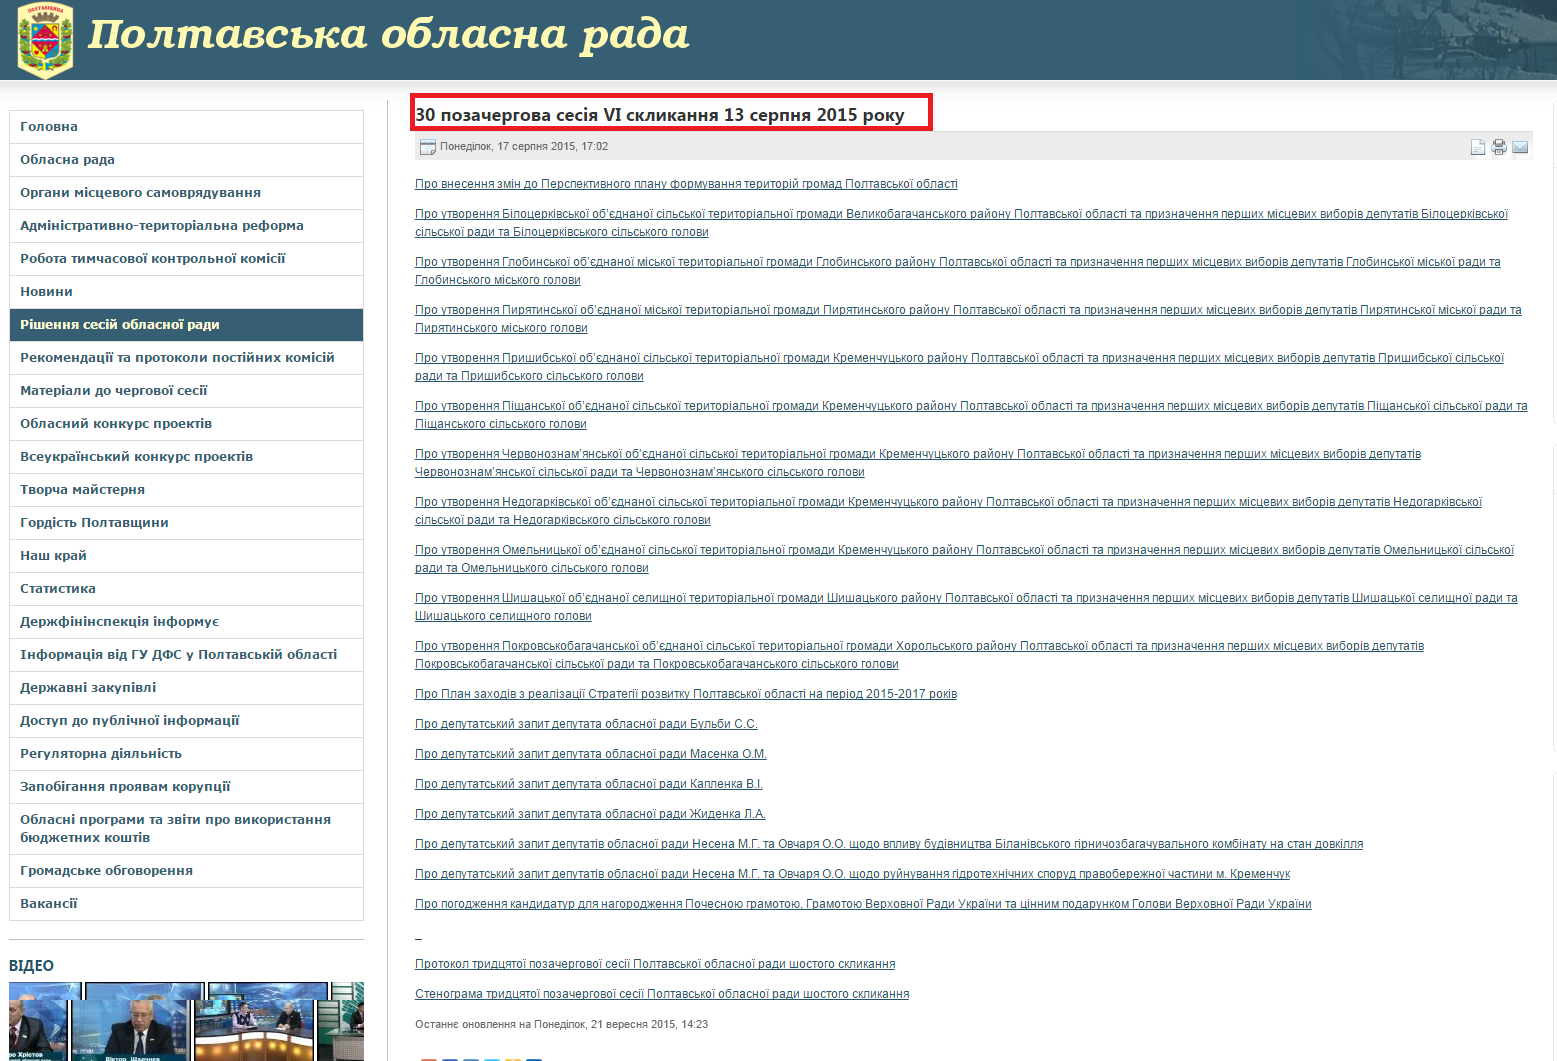 http://www.oblrada.pl.ua/index.php/sesii/rishennja-sesij-oblasnoyi-radi-vi-sklikannja/6546-30-pozachergova-sesija-vi-sklikannja-13-serpnja-2015-roku